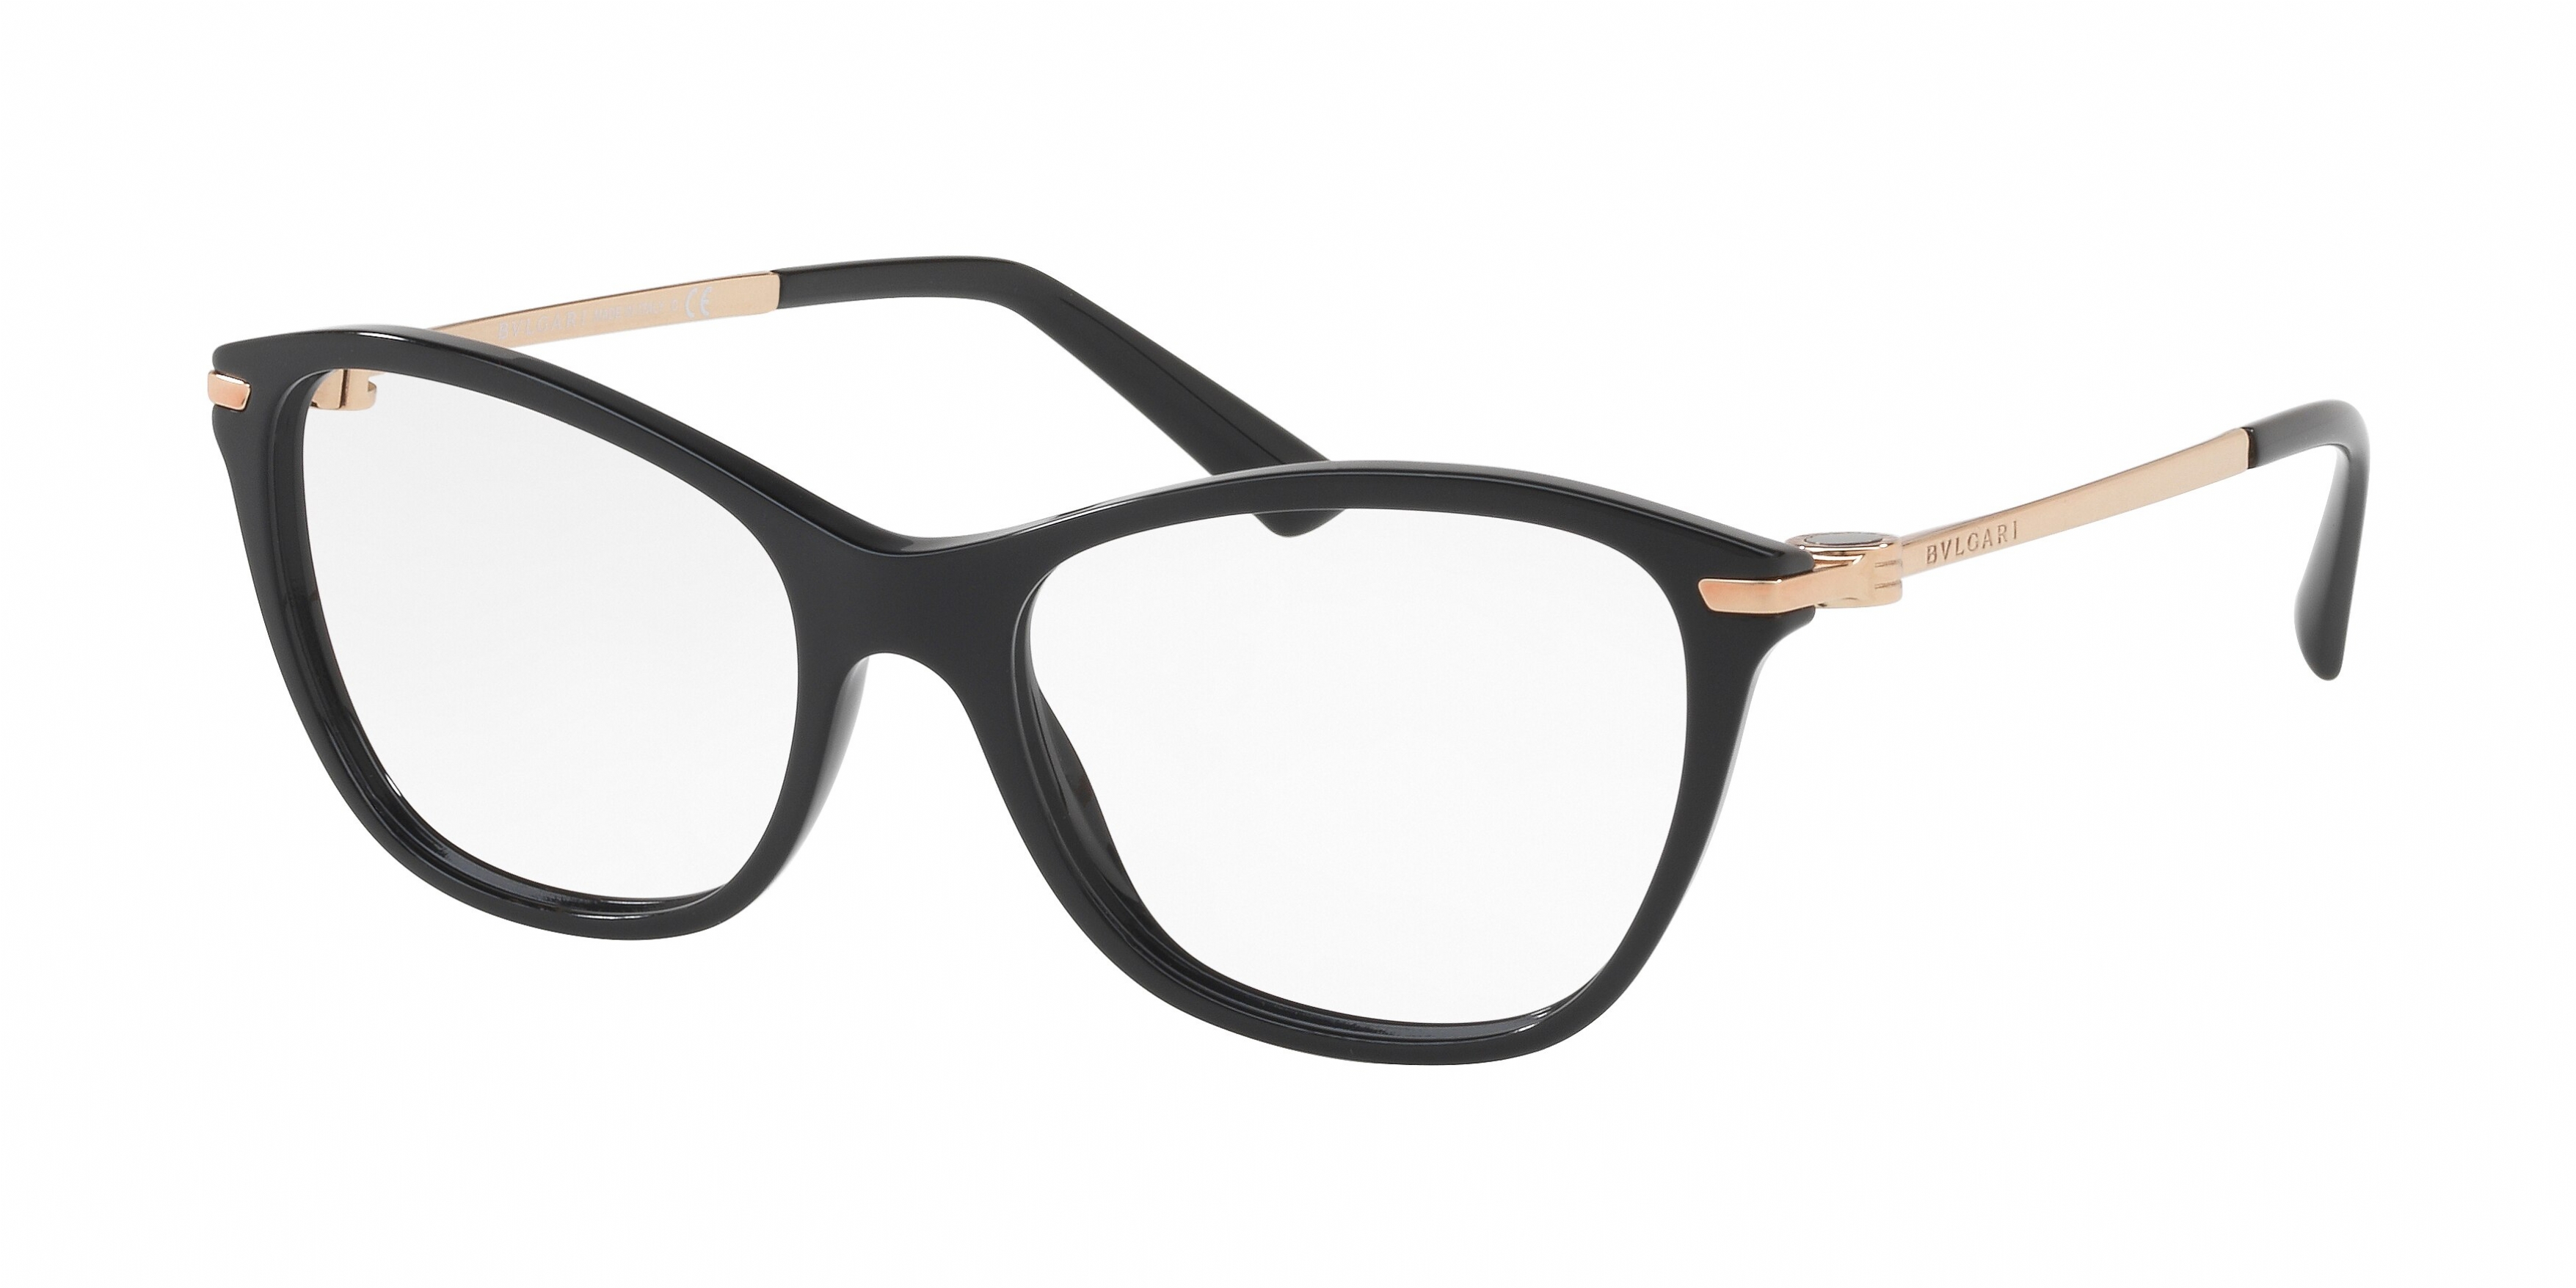 Buy Bvlgari Eyeglasses directly from OpticsFast.com